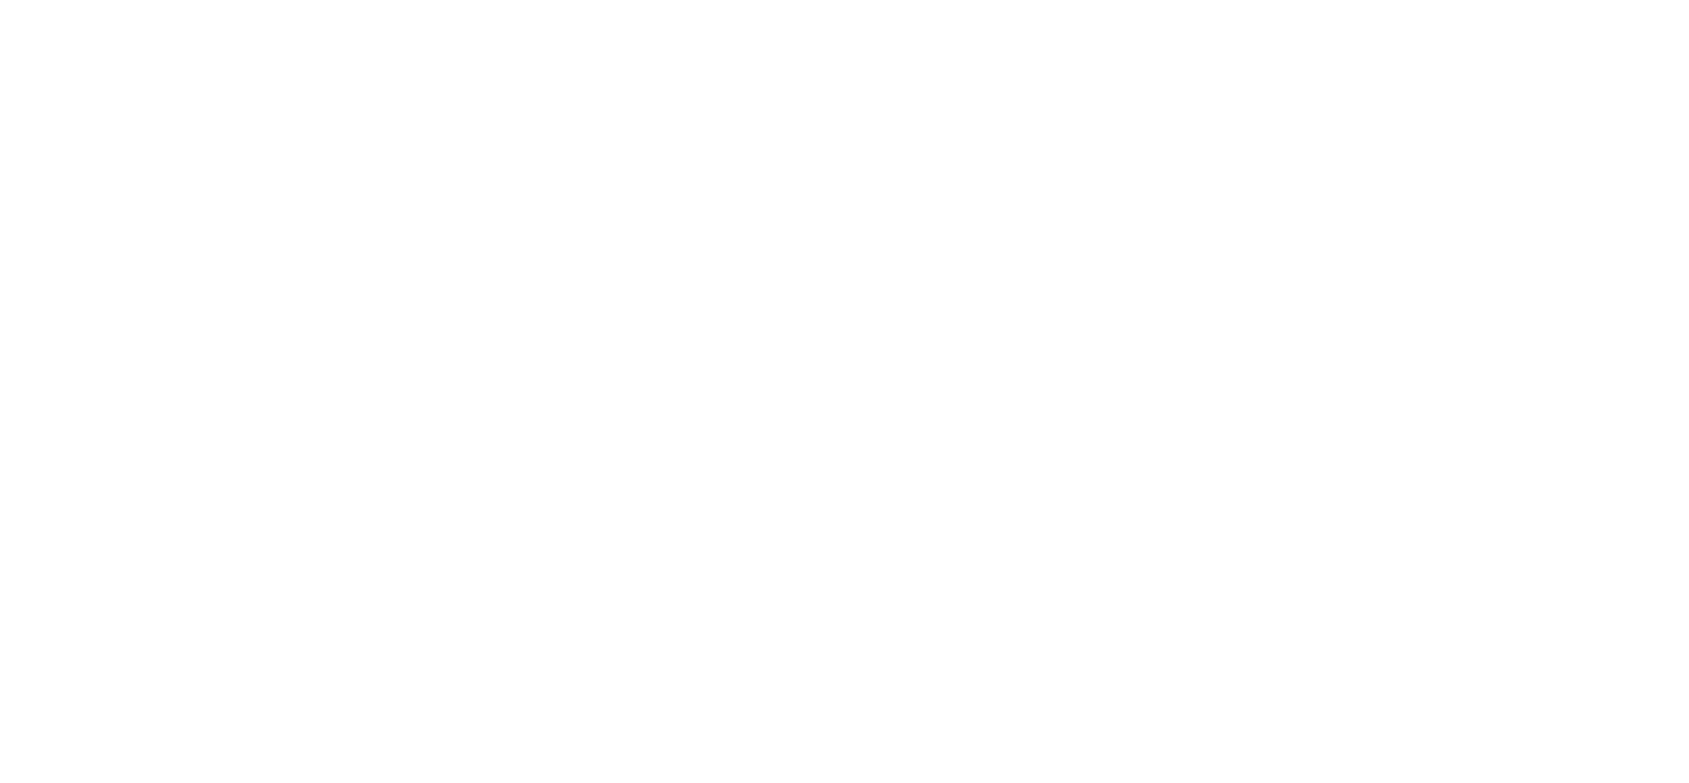 Triadex Services